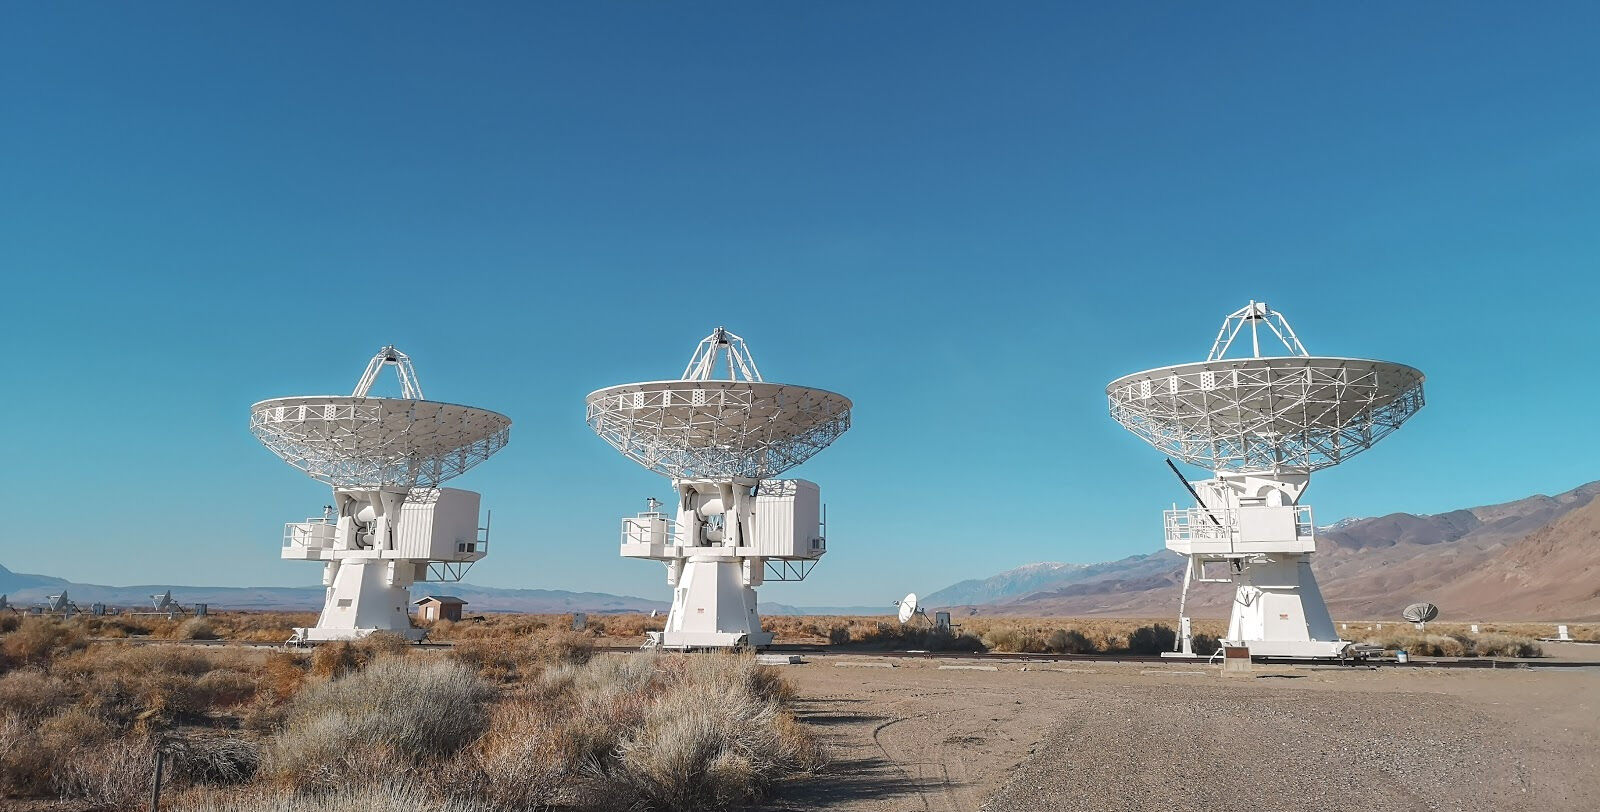 radioteleskopet i california